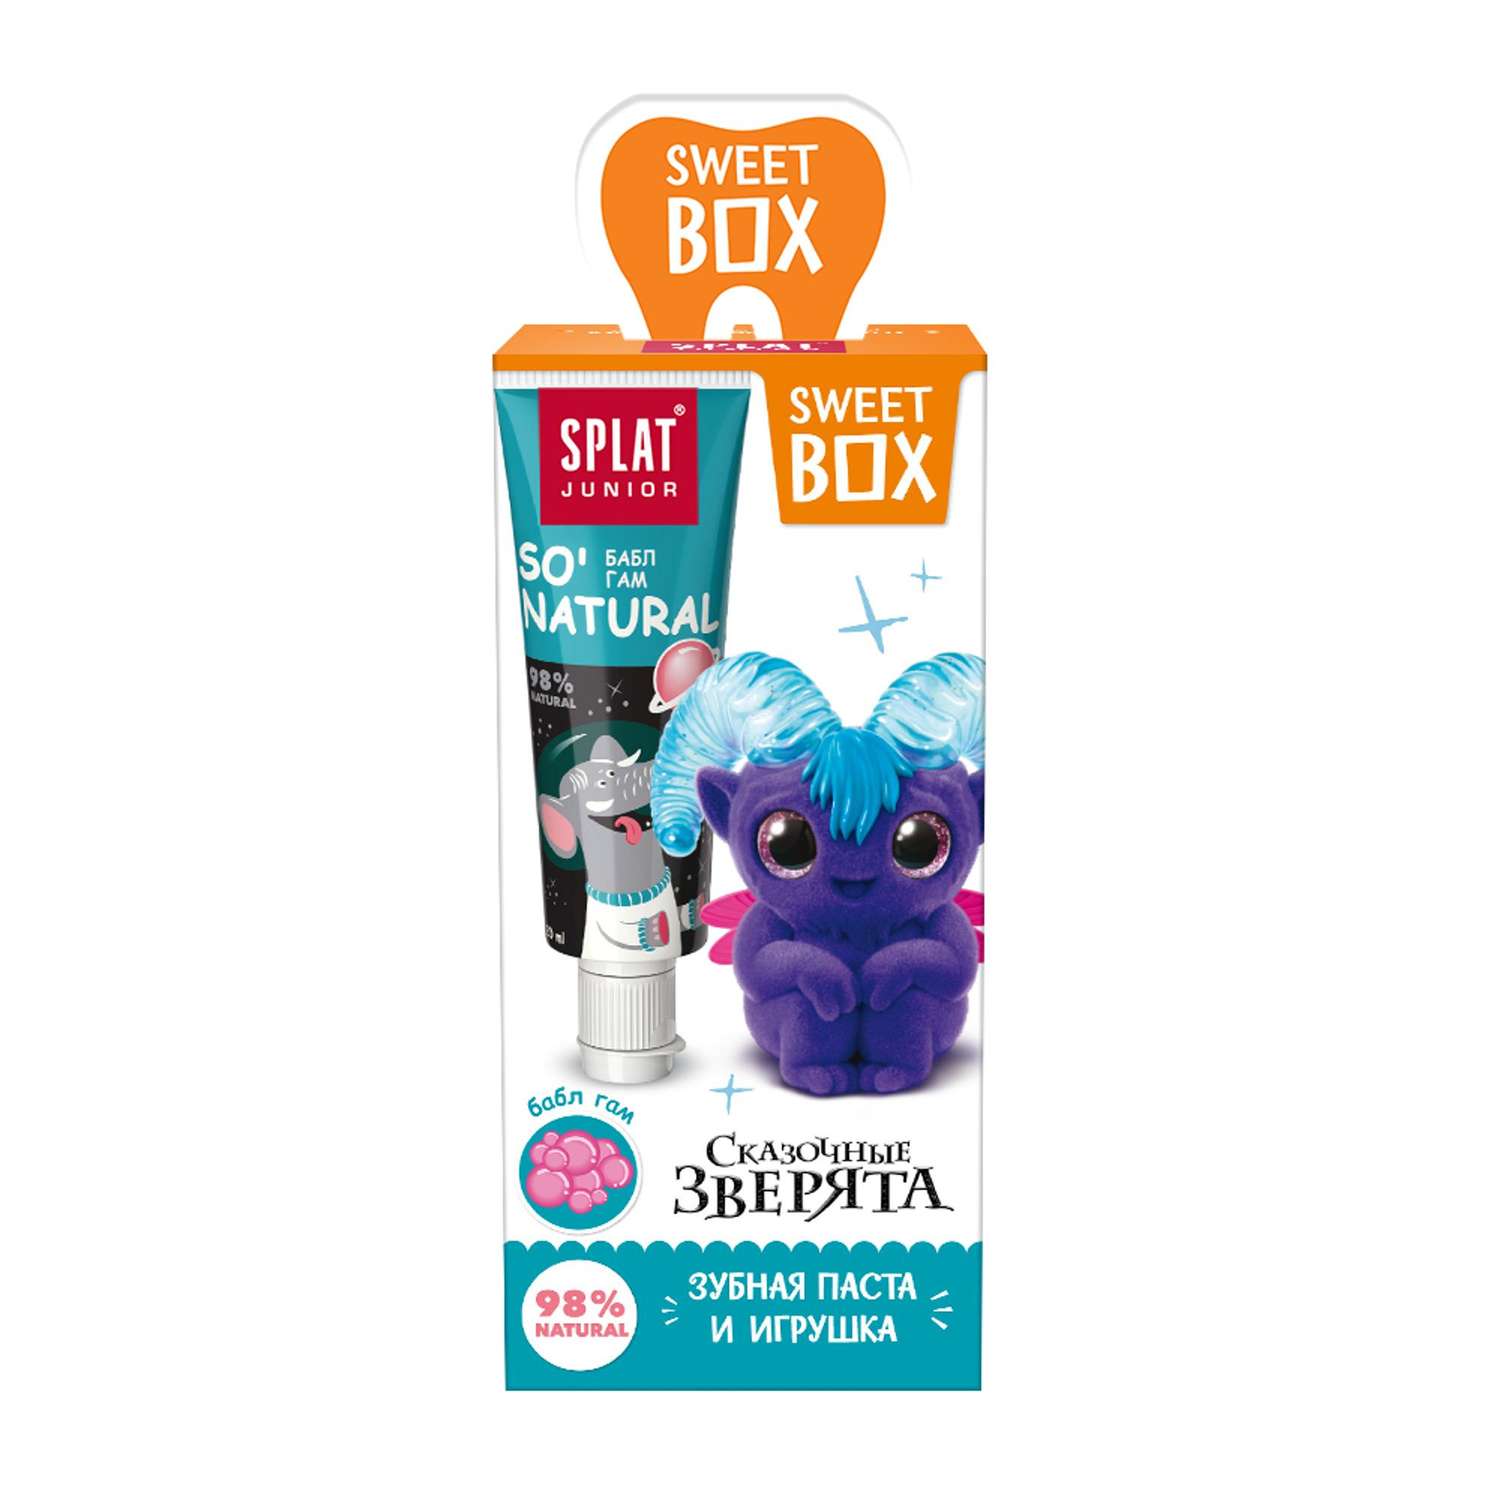 Набор Splat Sweetbox зубная паста Бабл гам 20мл+игрушка - фото 1